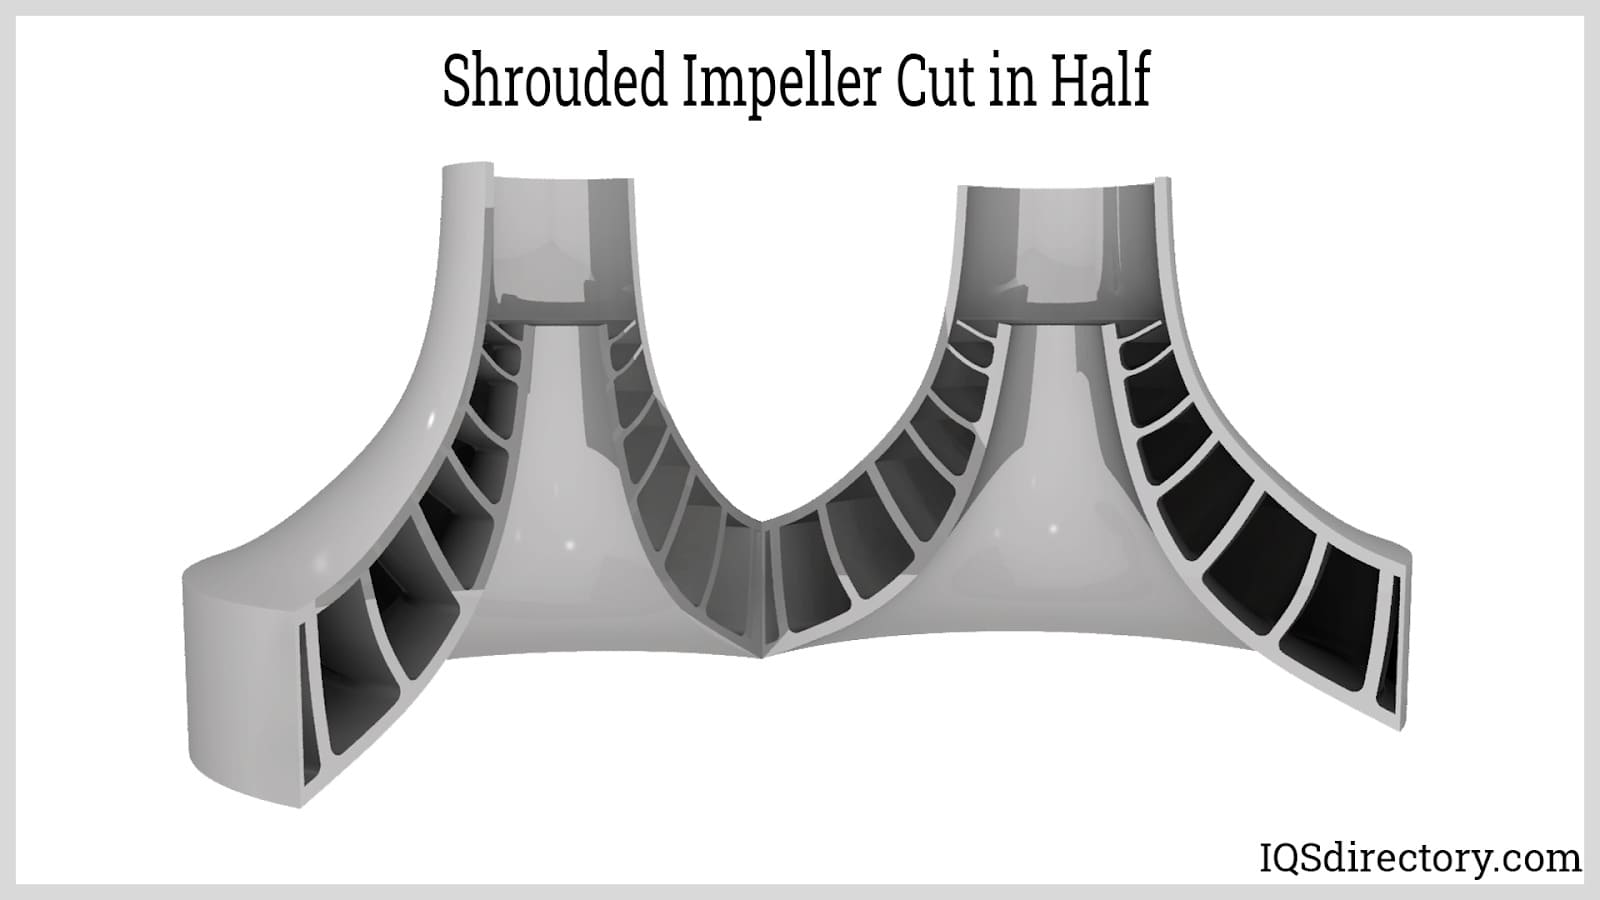 Shrouded Impeller Cut in Half